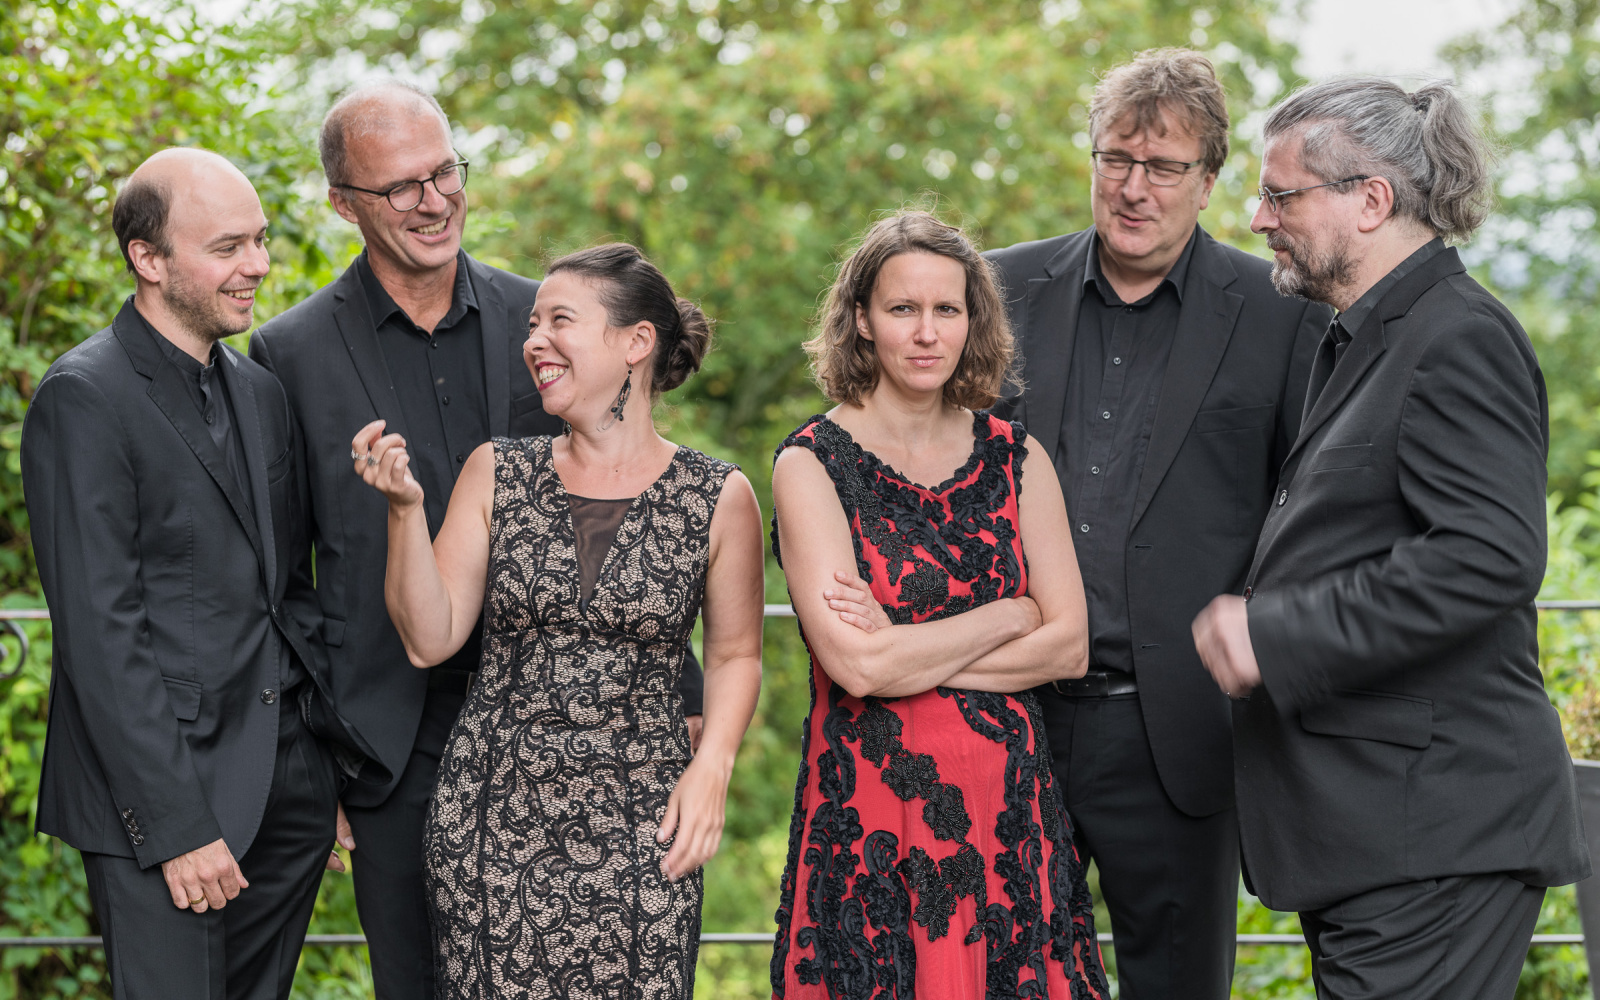 Group portrait of musicians in black evening dress.